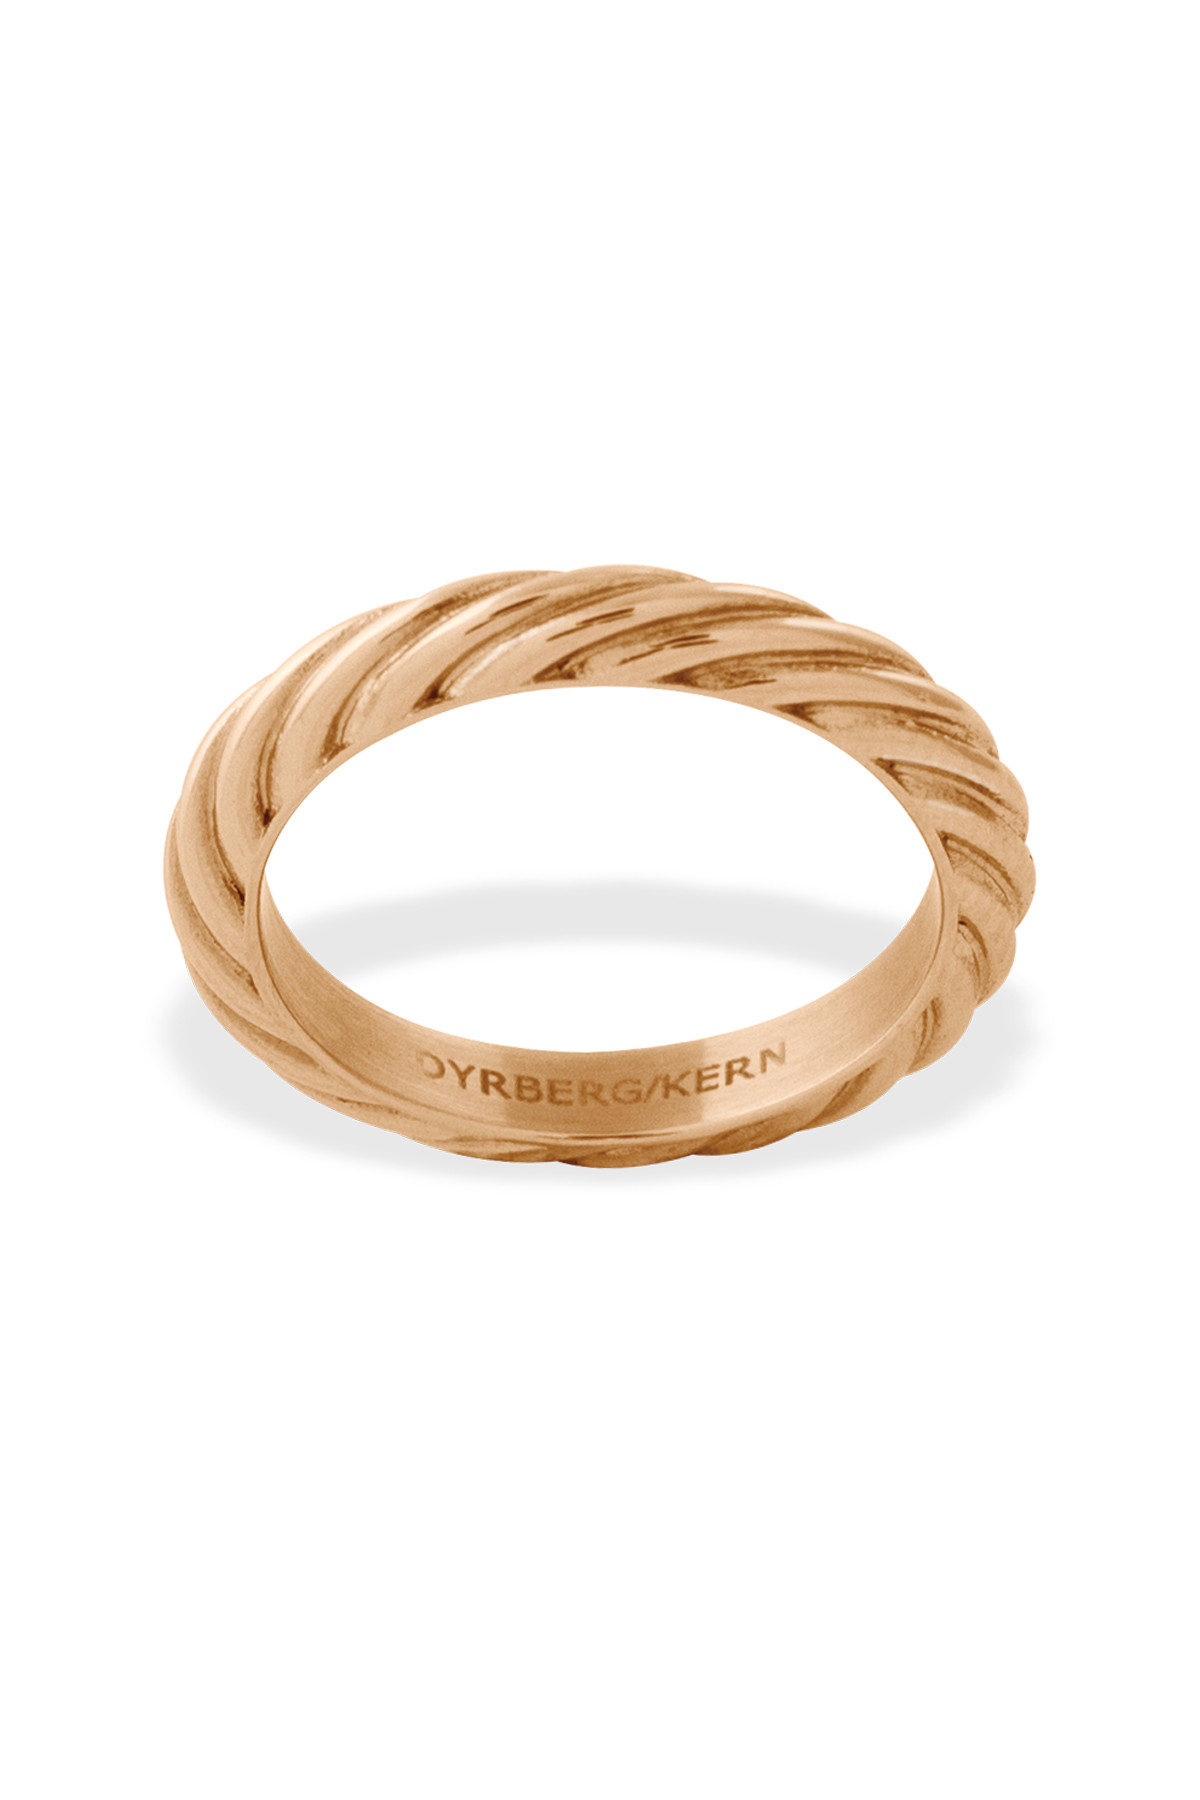 Dyrberg/Kern Spacer C Ring, Color: Gold, Ii/, Women